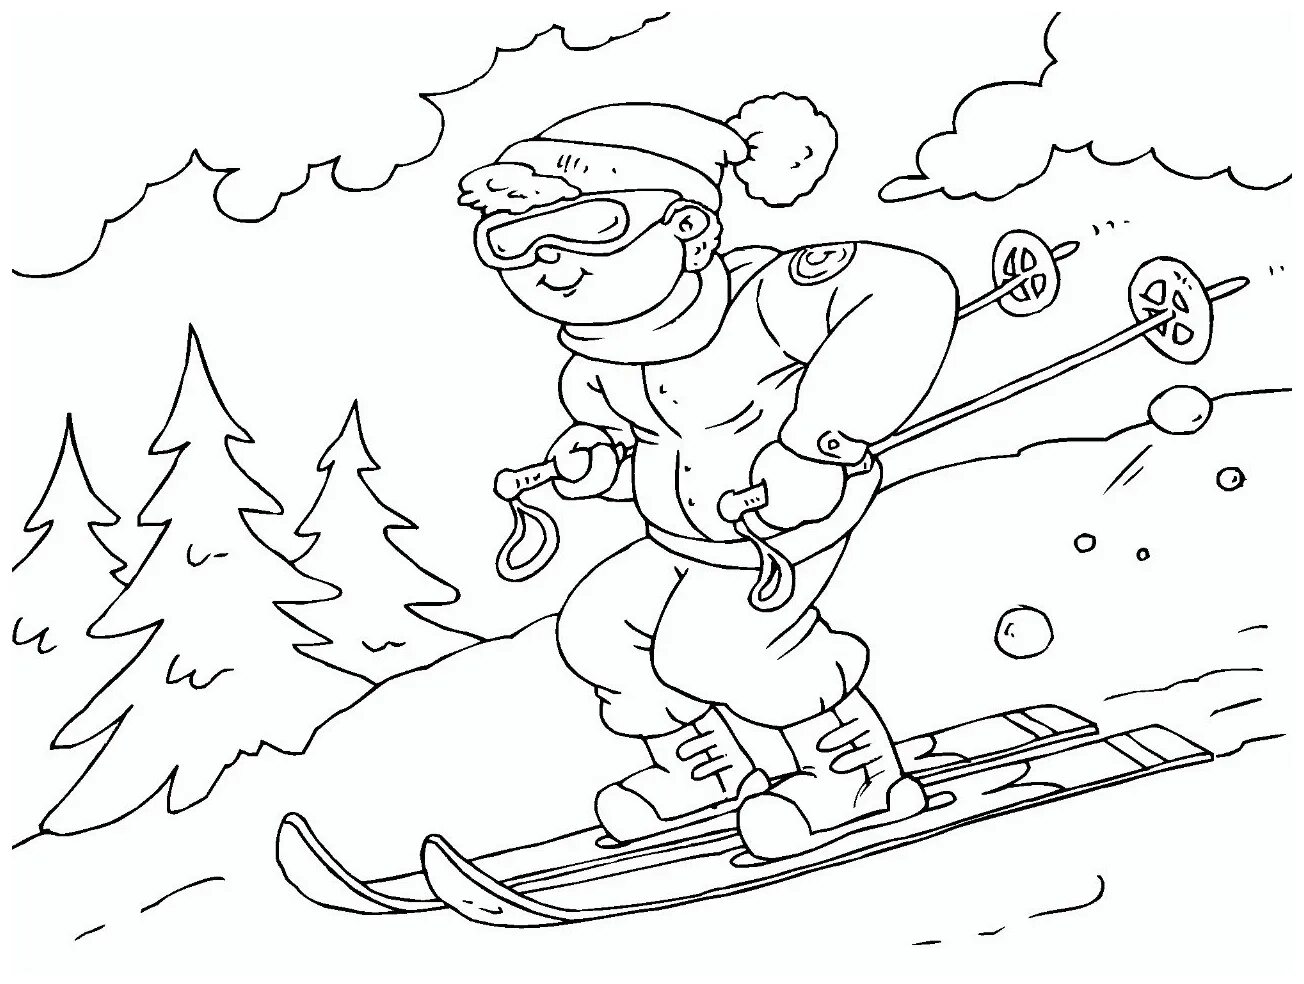 Skier for children 6 7 years old #7